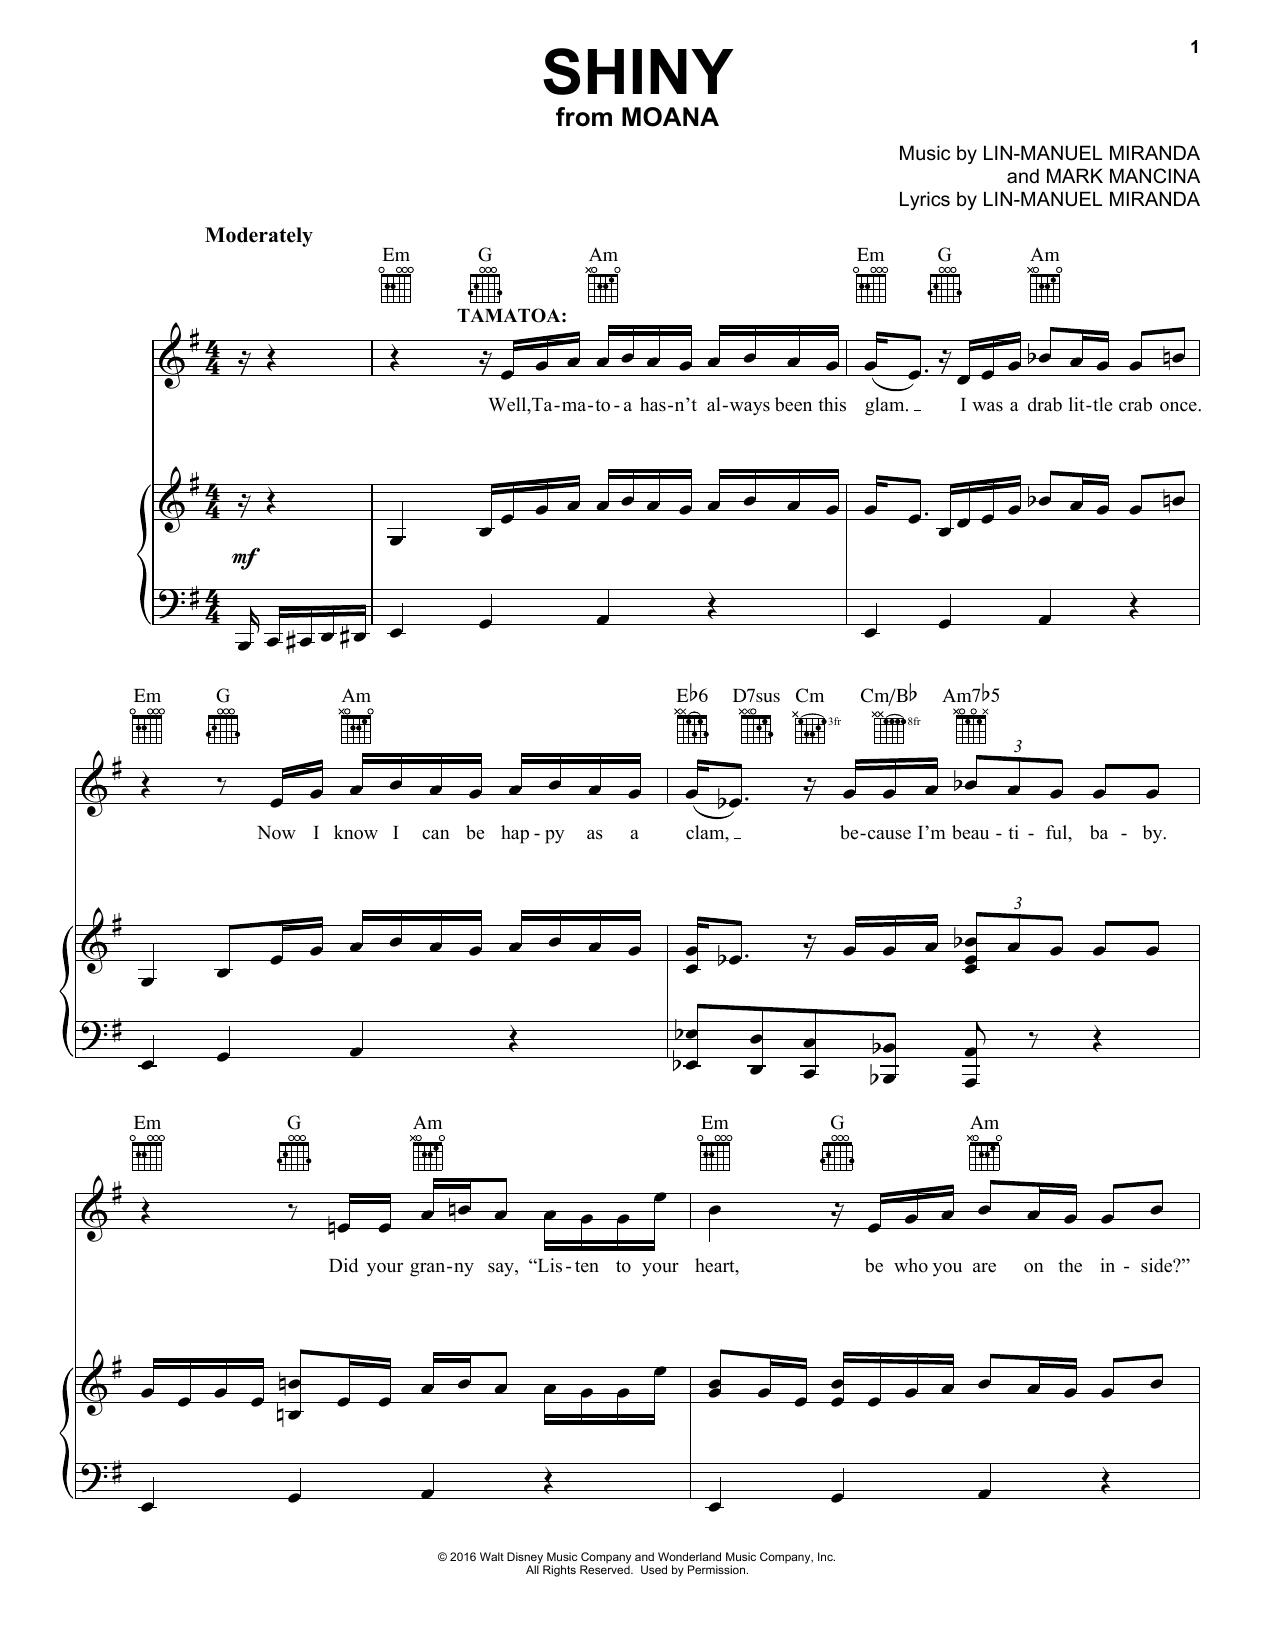 Lin-Manuel Miranda Shiny (from Moana) Sheet Music Notes & Chords for Ukulele - Download or Print PDF